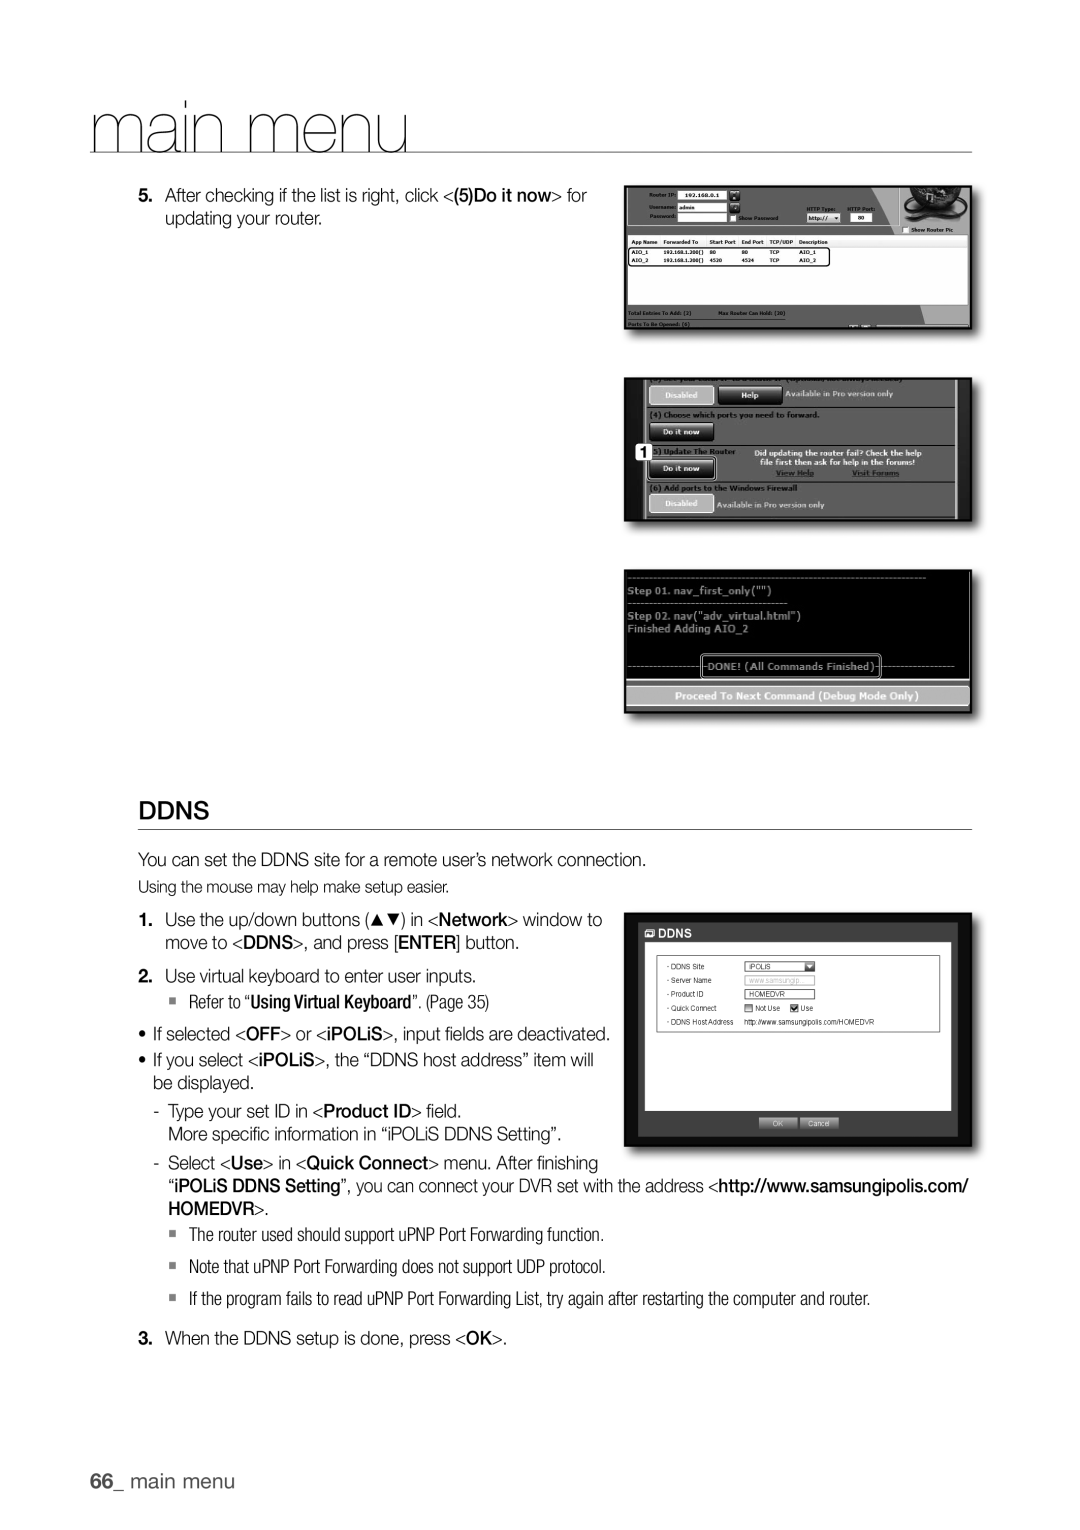 Samsung SDR3100 user manual DDnS, main menu 